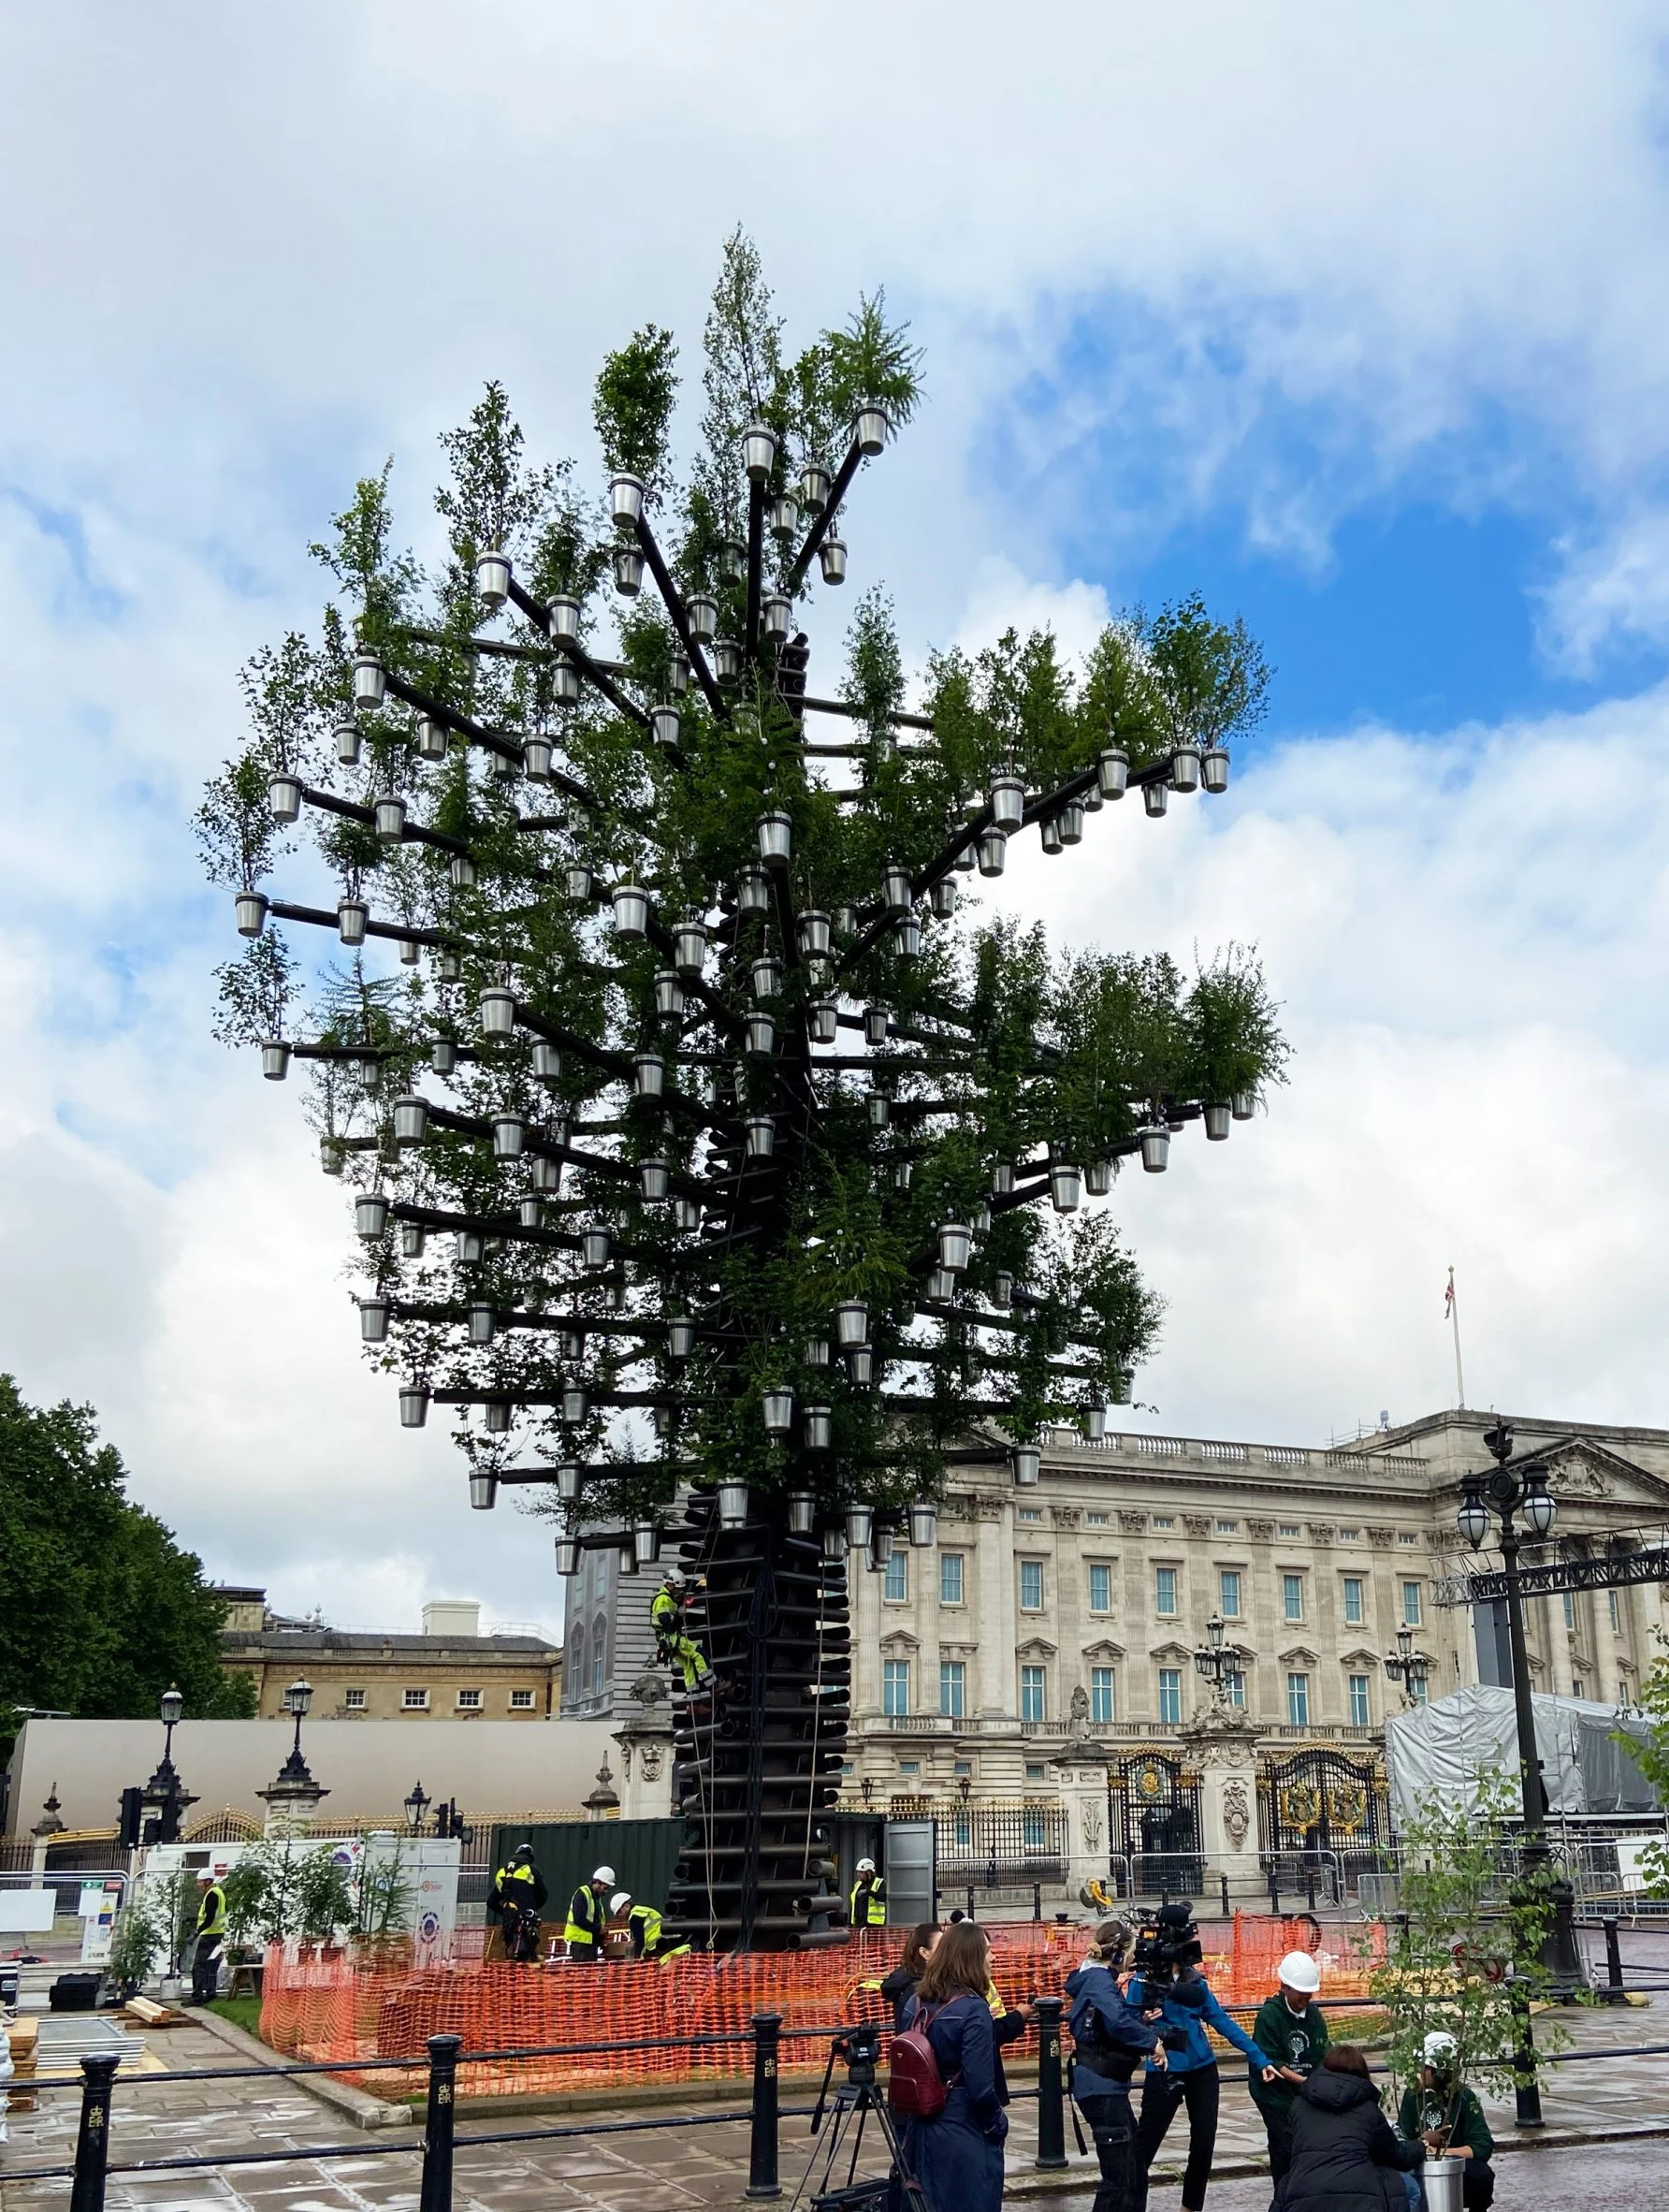 Tree of Trees installation by Heatherwick Studio